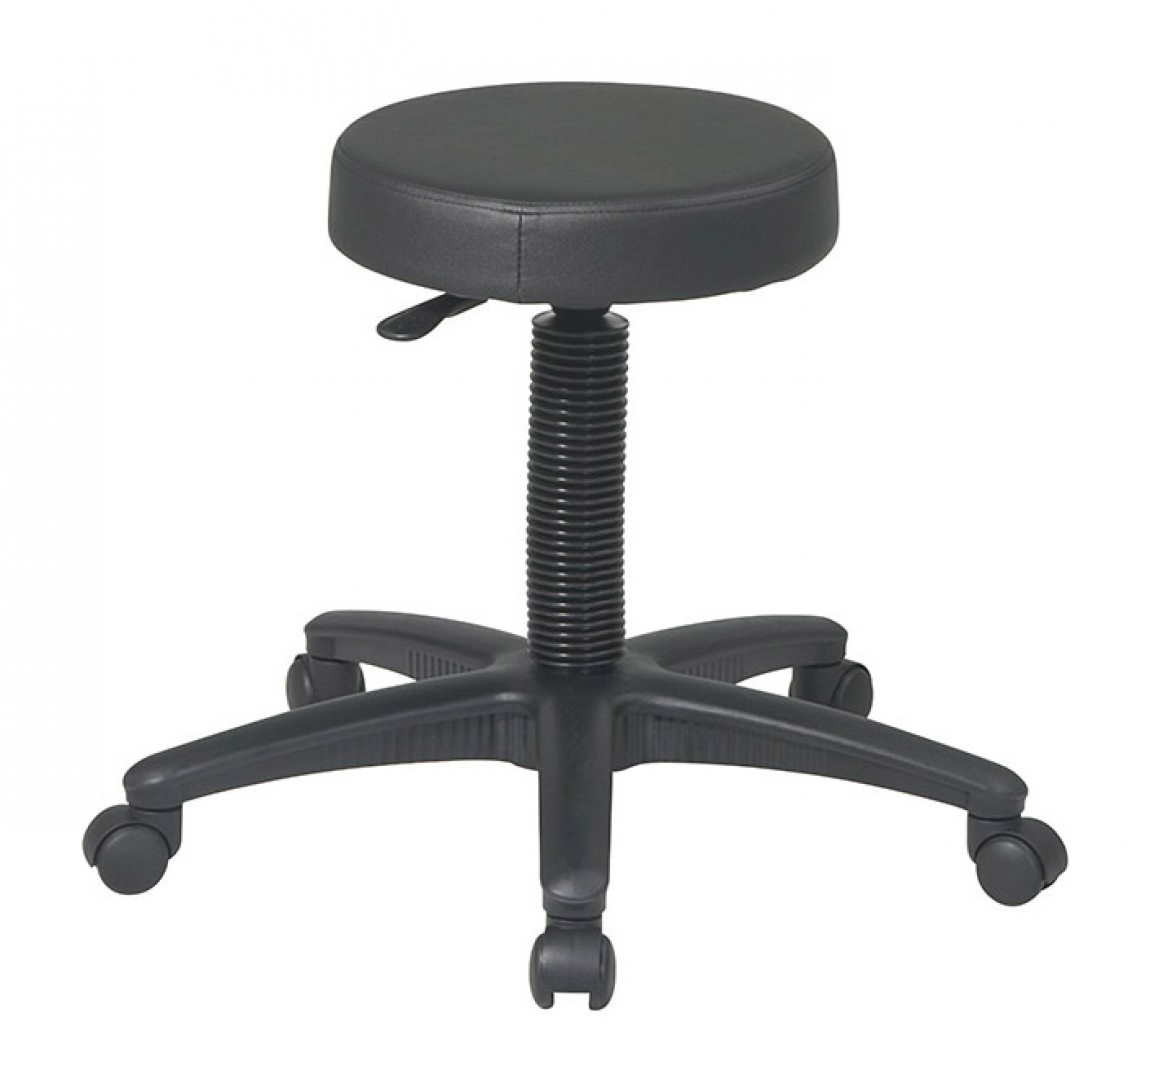 https://madisonliquidators.com/images/p/1150/24836-rolling-stool-chair-1.jpg